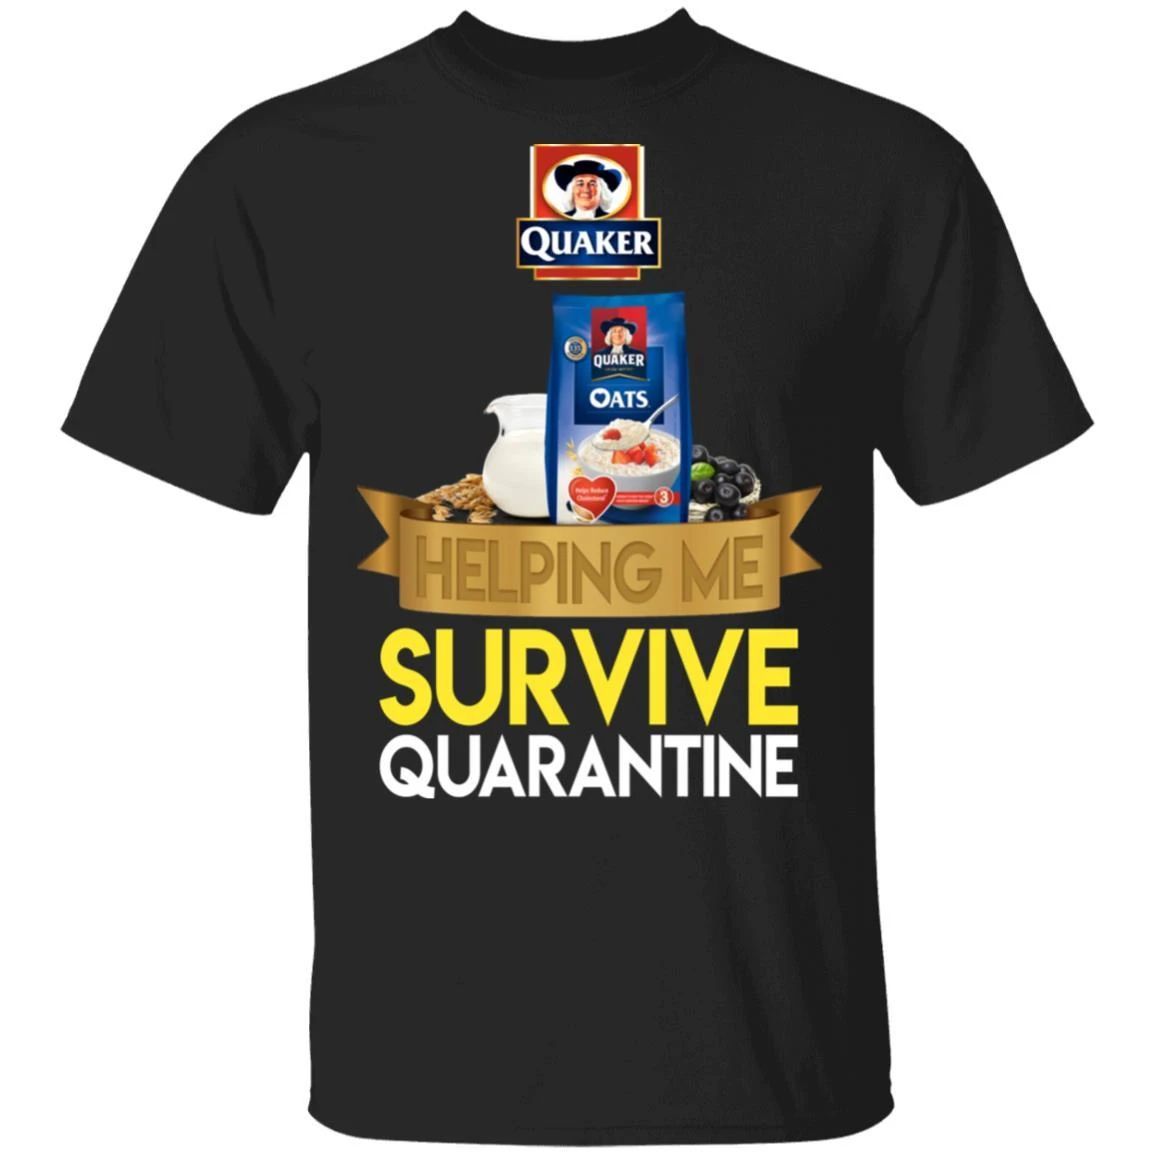 Quaker Helping Me Survive Quarantine T-shirt